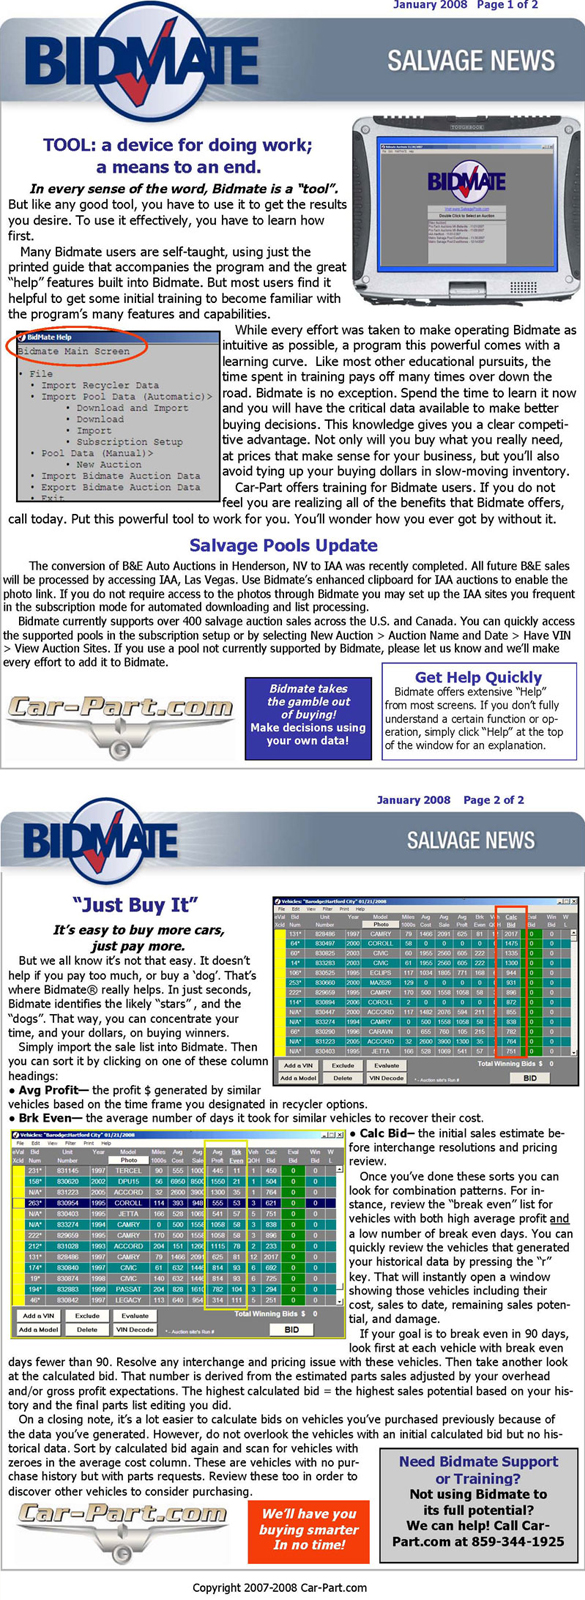 Bidmate Salvage News - January 2008